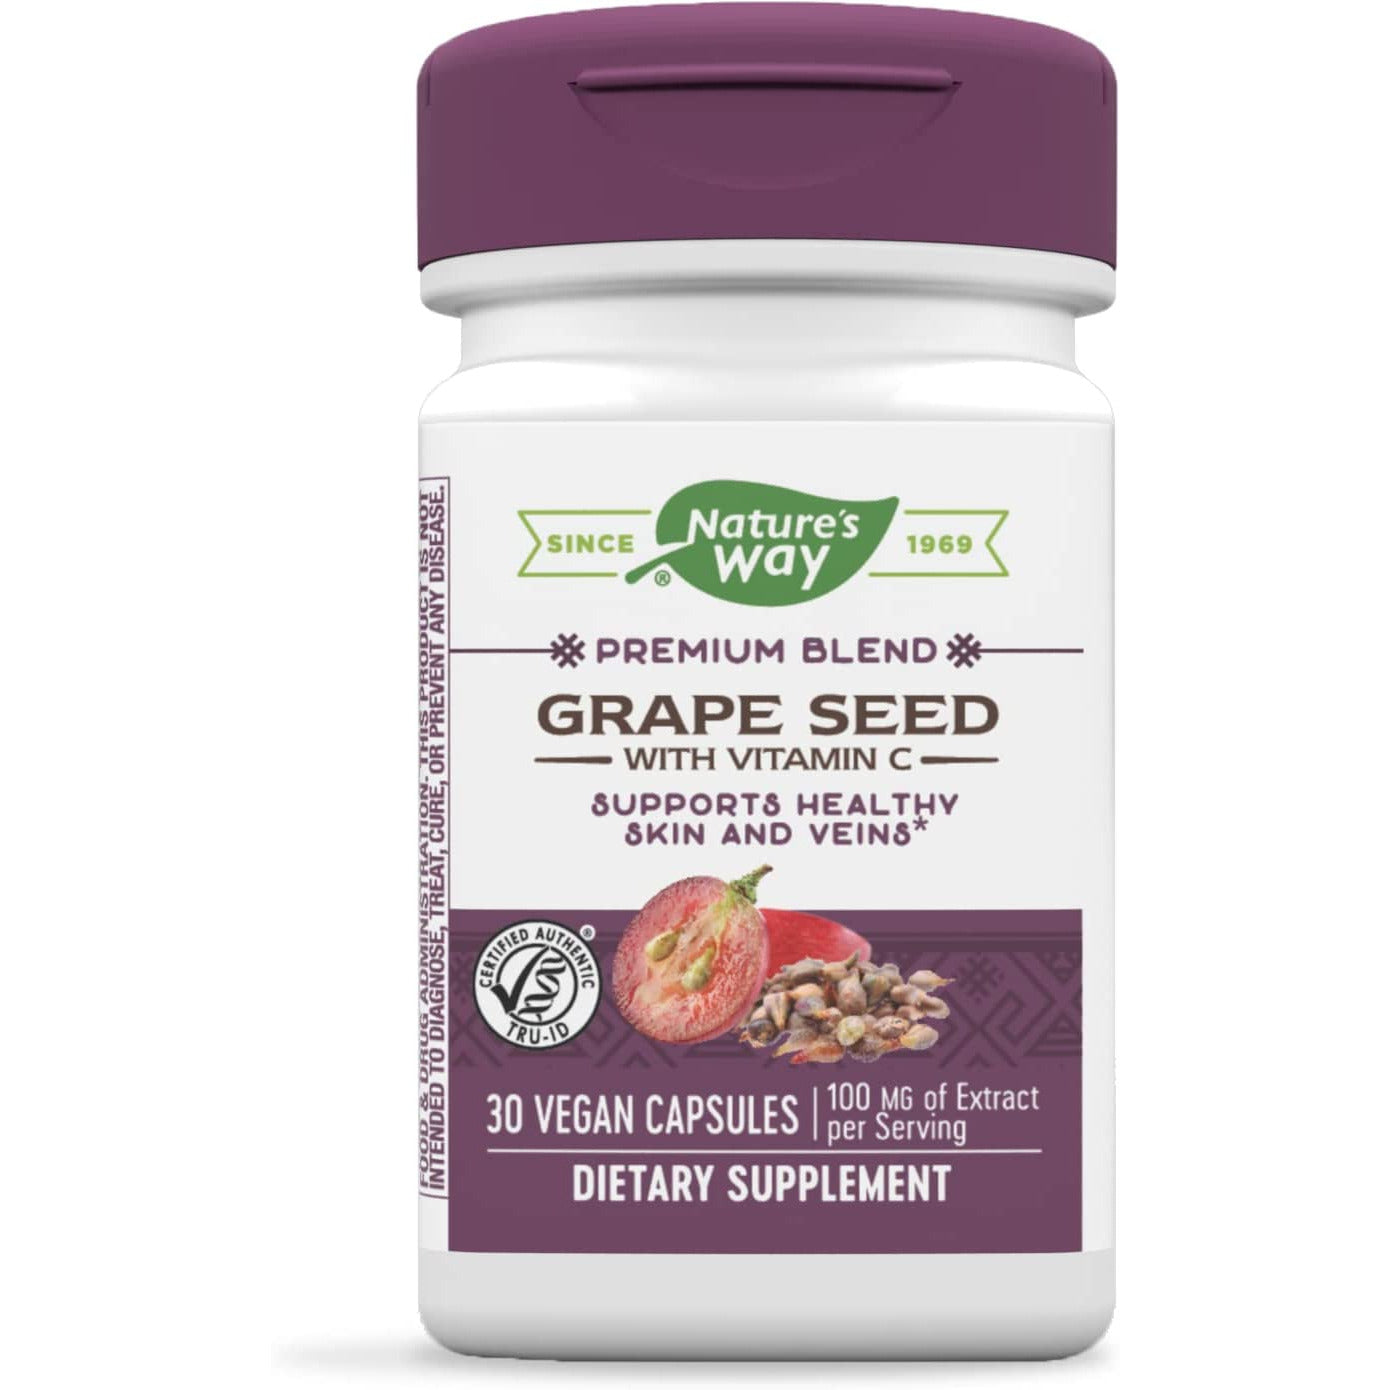 Nature's Way Premium Extract Standardized Grape Seed